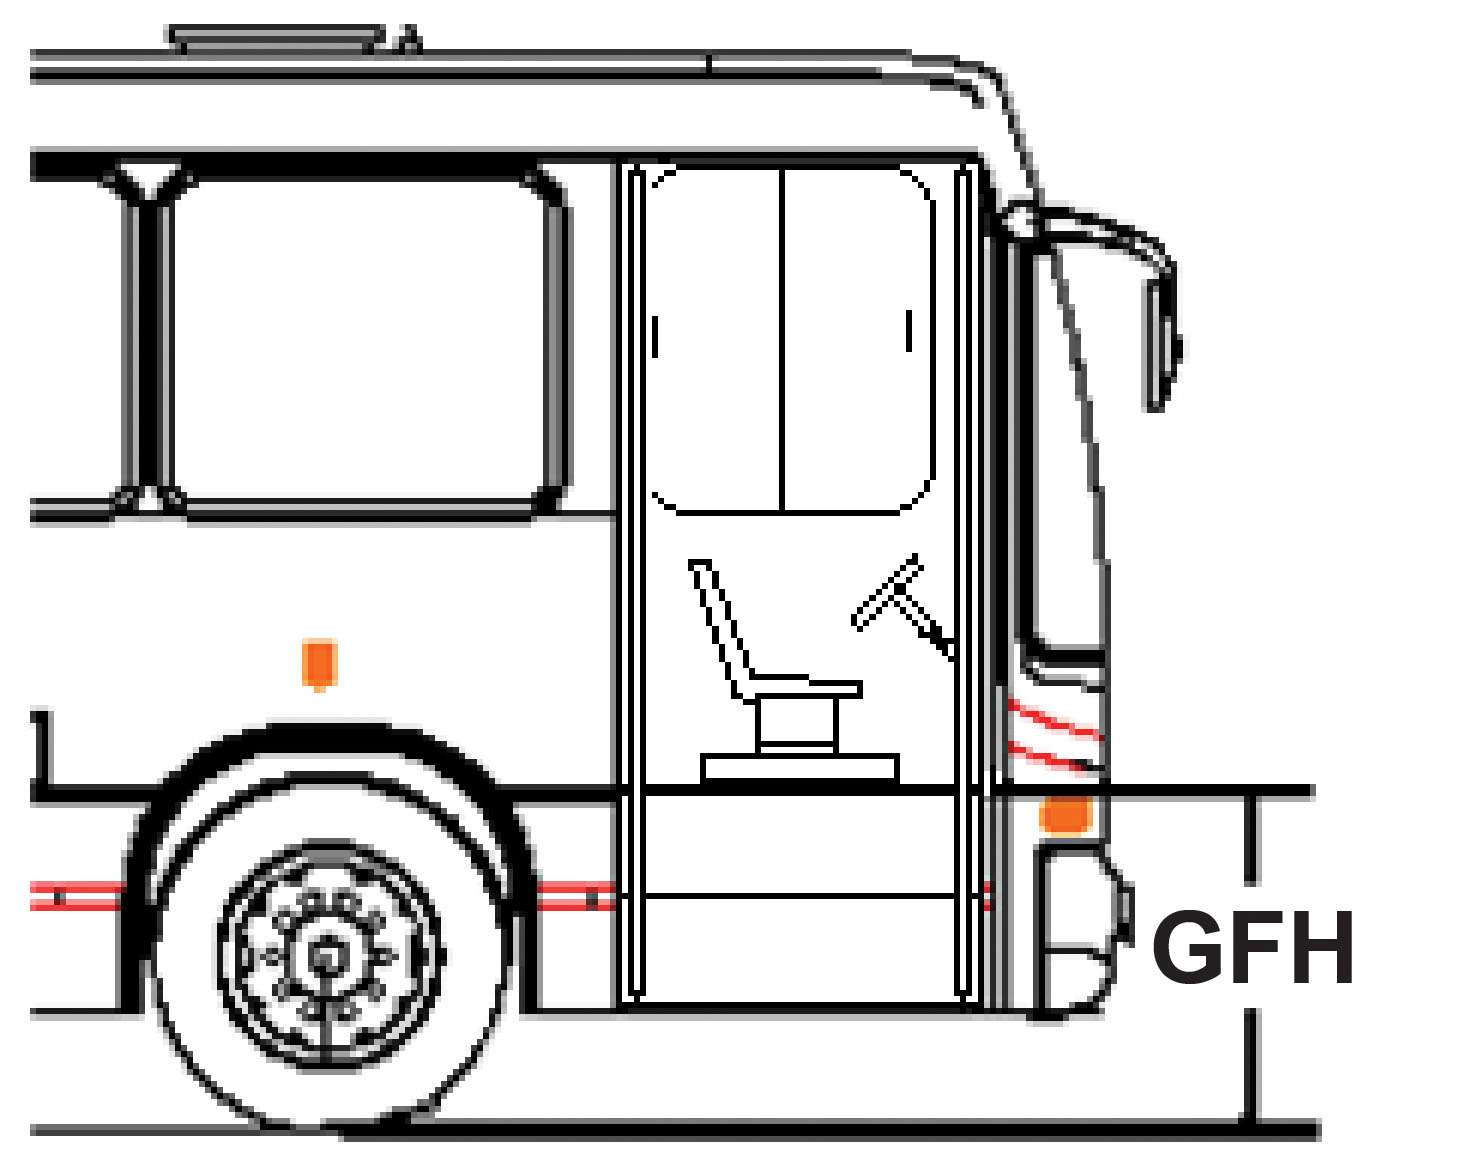 Fig. 20.7 GFH 960 mm maximum Long Bus; Rear Engine High Floor